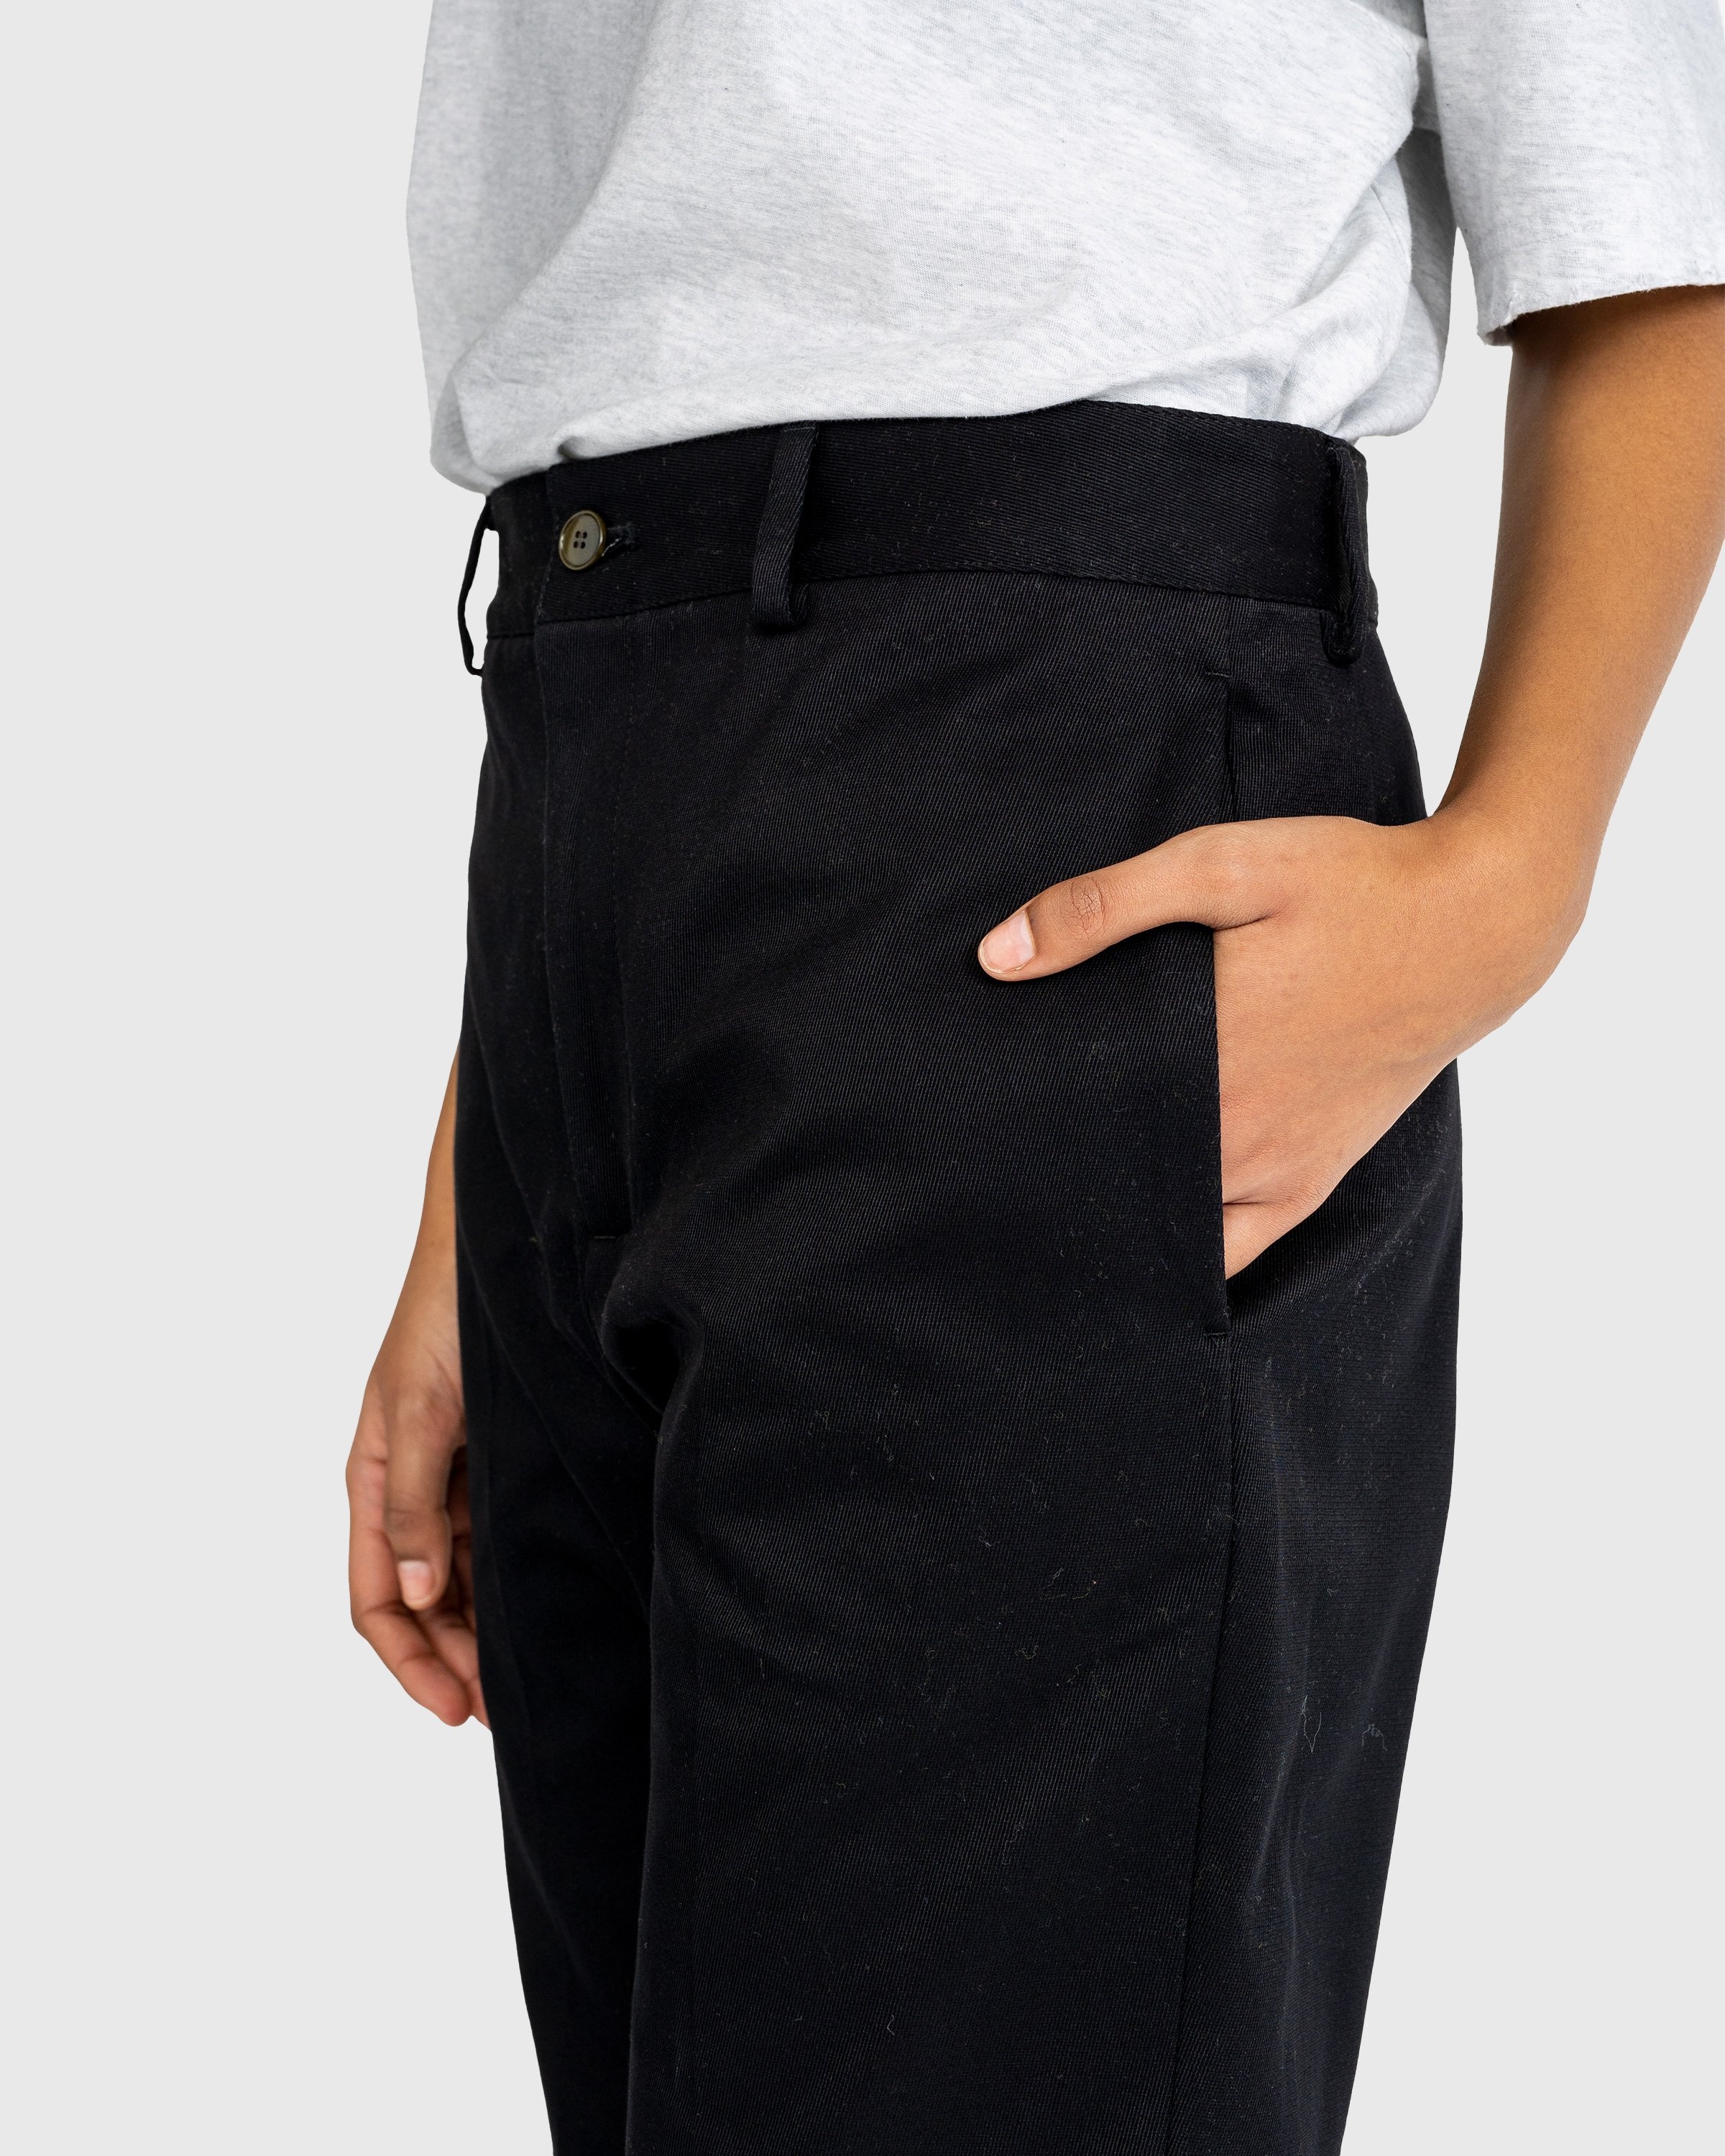 Acne Studios – Twill Trousers Black 1 - Trousers - Black - Image 5